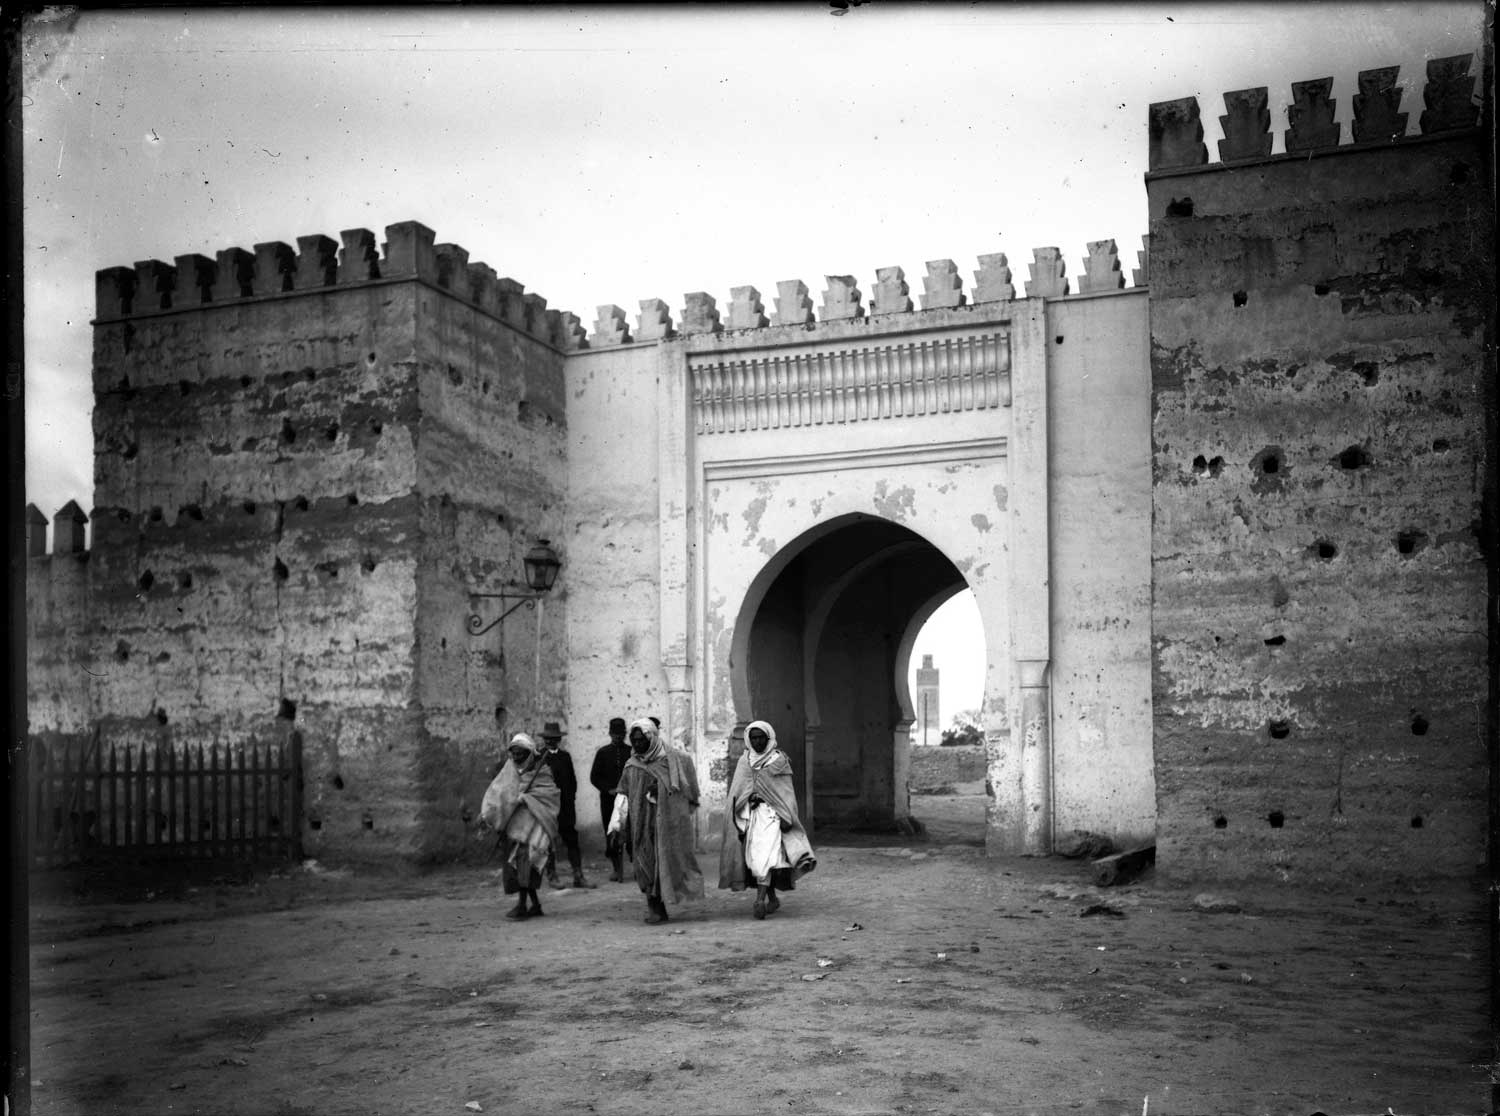 Bab Sidi Abd el Ouahab - Exterior view of a city gate